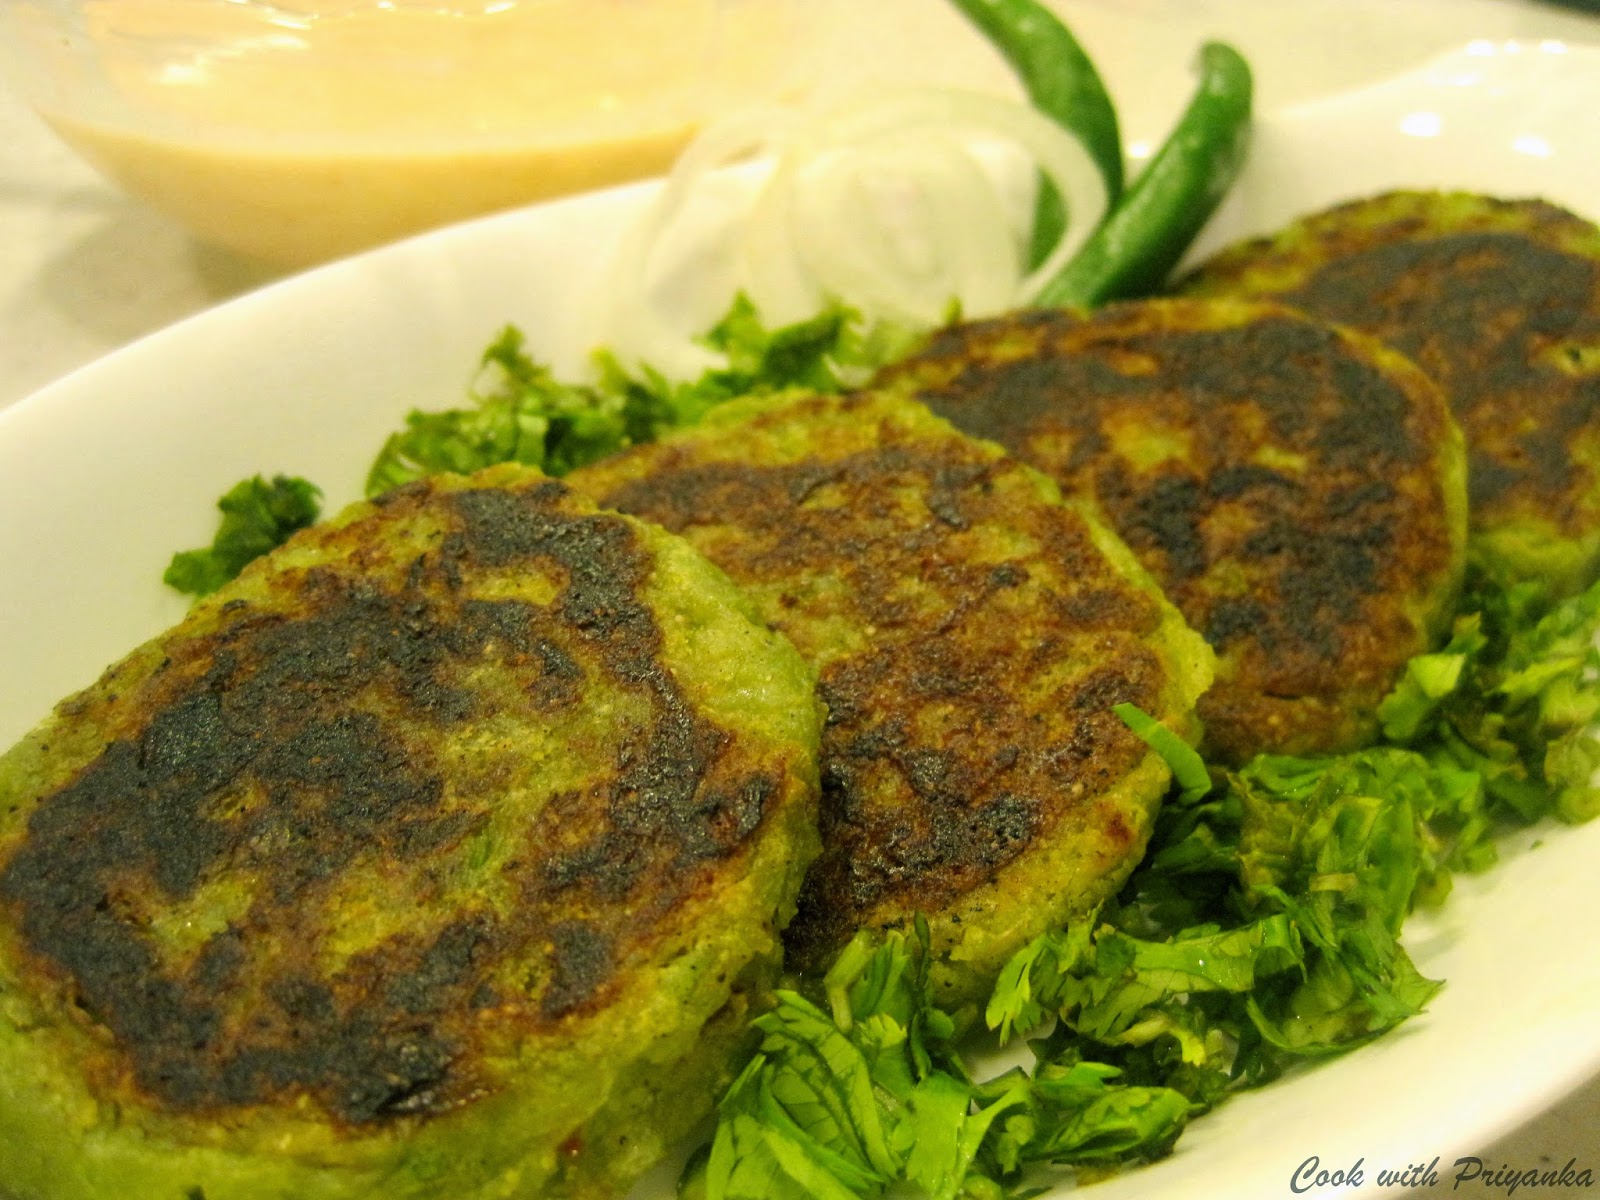 http://cookwithpriyankavarma.blogspot.co.uk/2014/04/avocado-kebabs.html